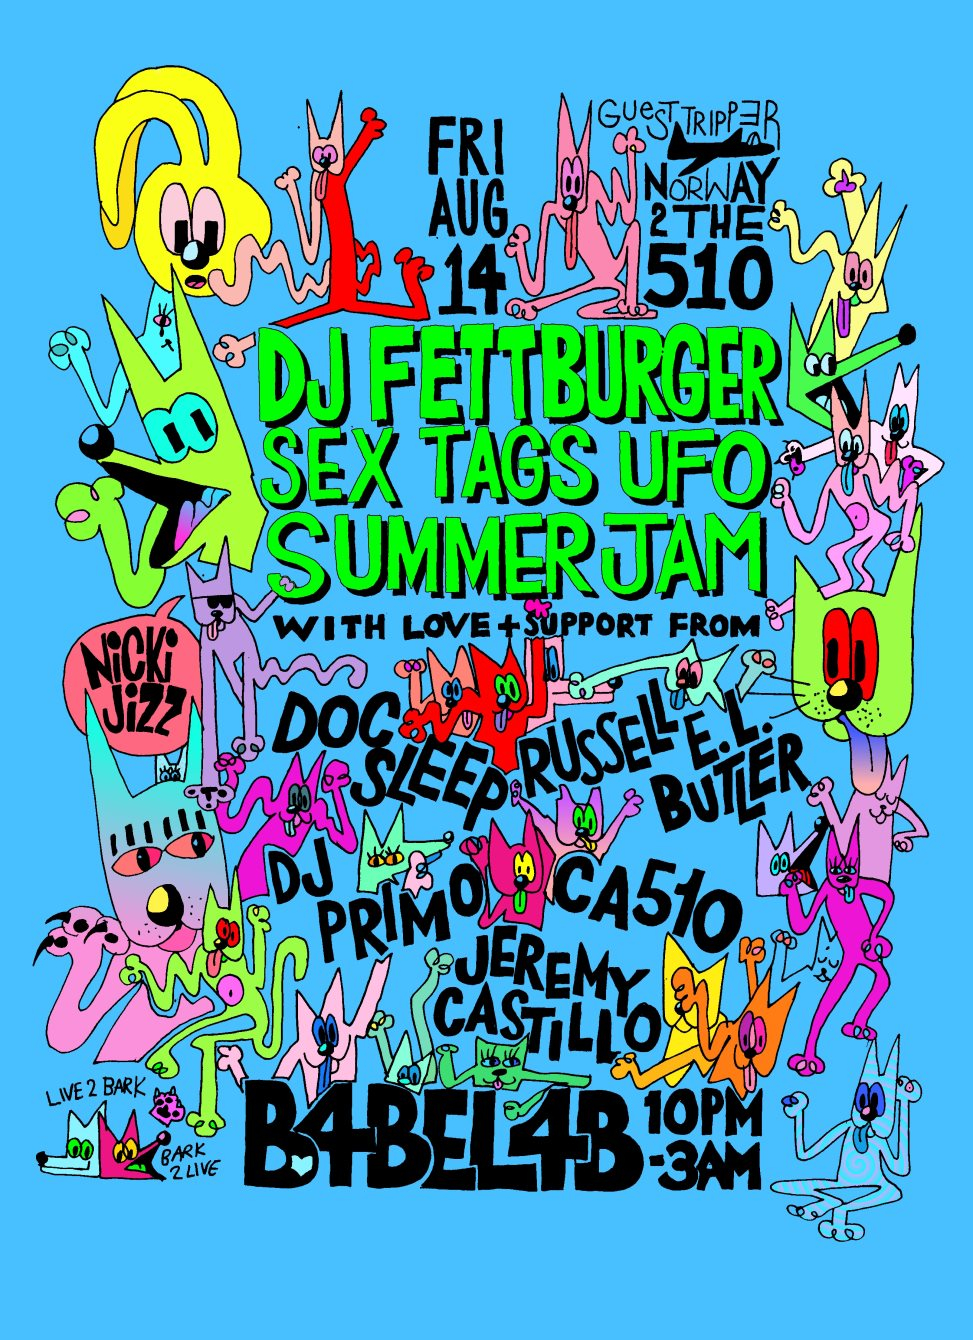 DJ Fettburger SEX Tags UFO Summer JAM - Flyer front